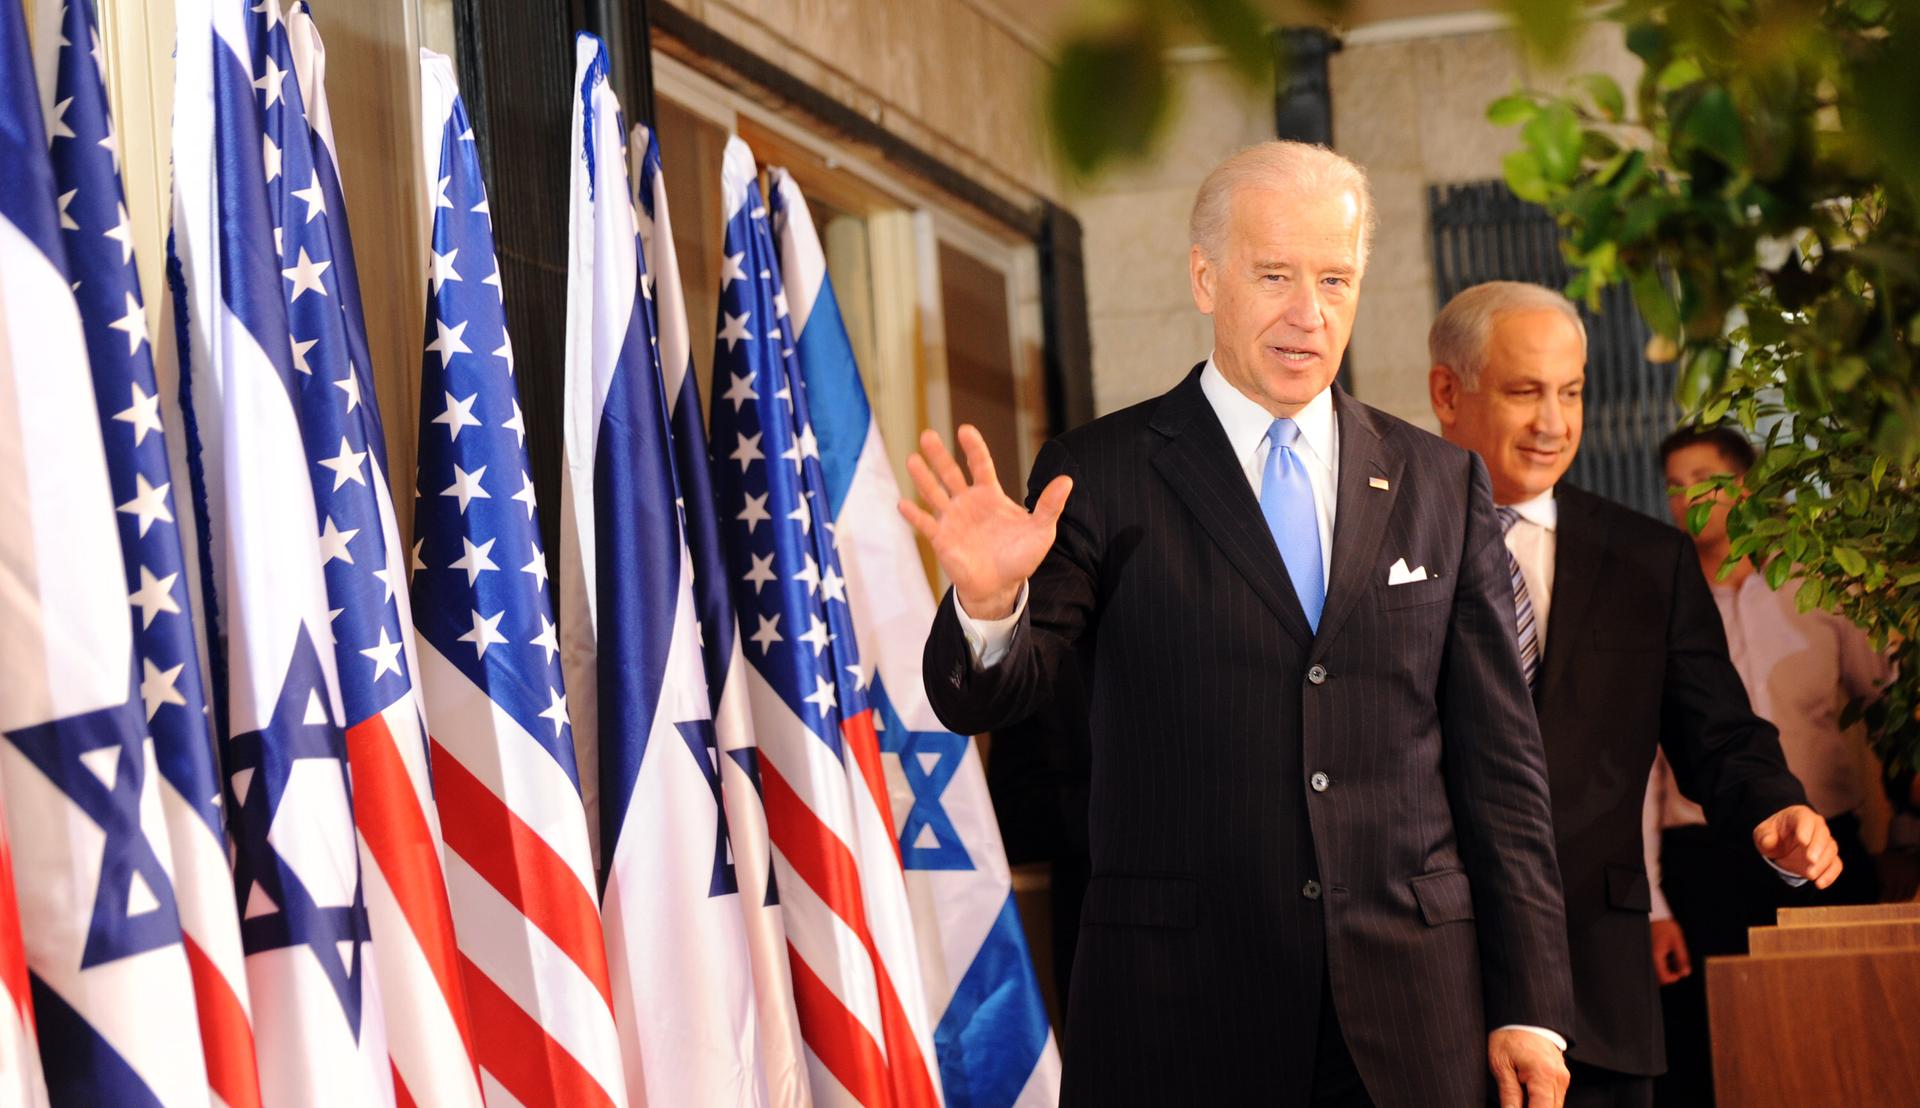 VP Joe Biden with Israeli PM Benjamin Netanyahu on a stage with US and Israeli flags